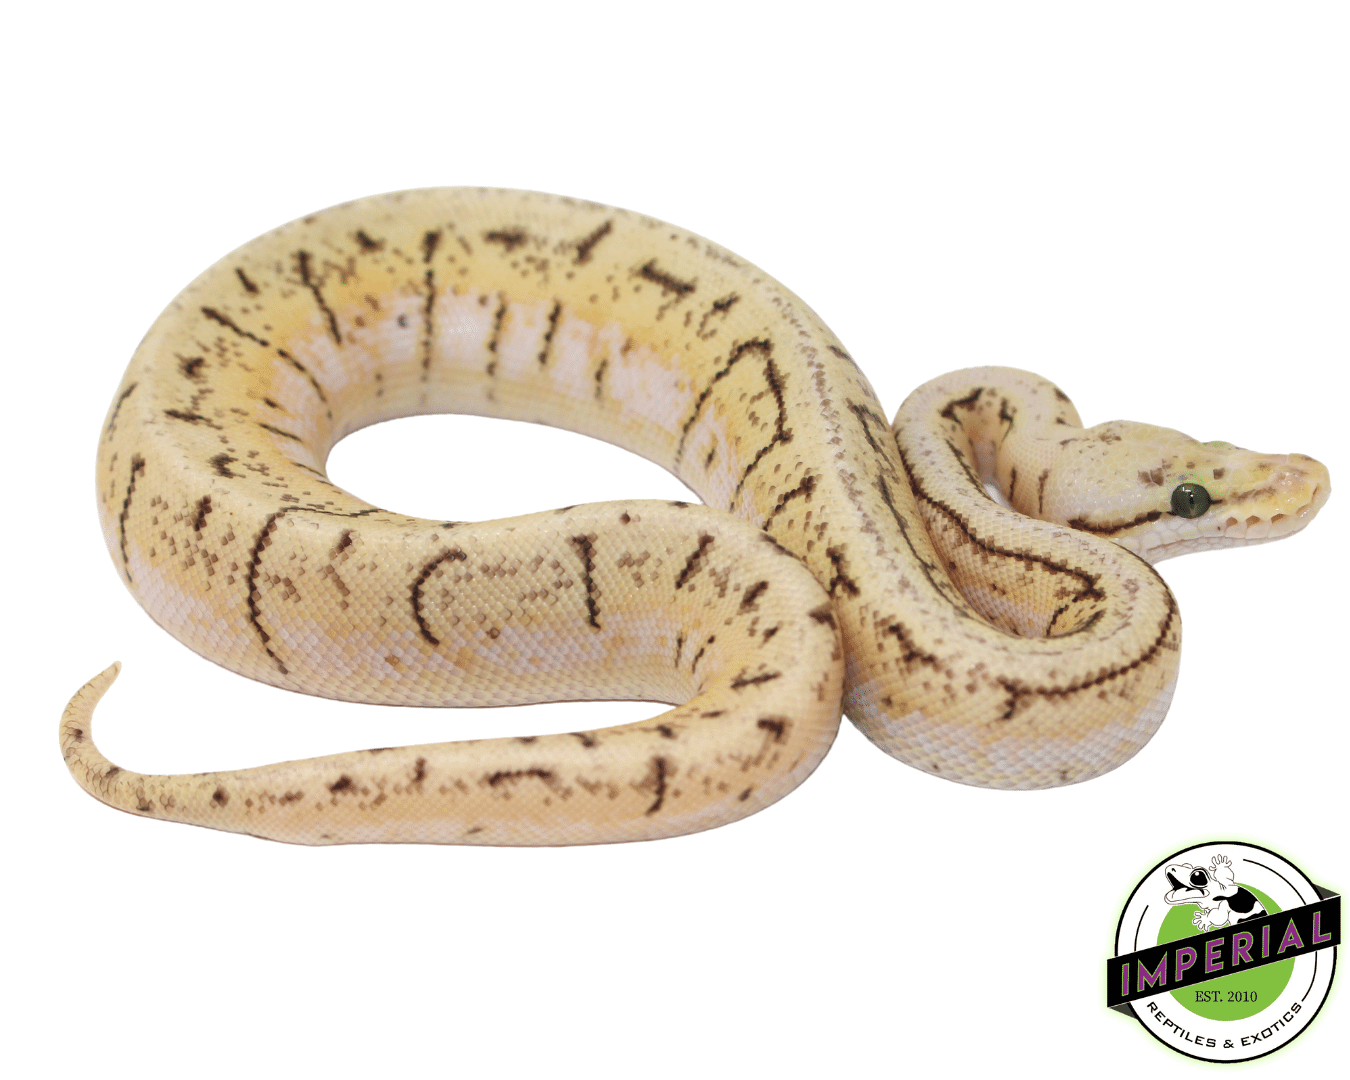 Lemonblast Spider ball python for sale, buy reptiles online